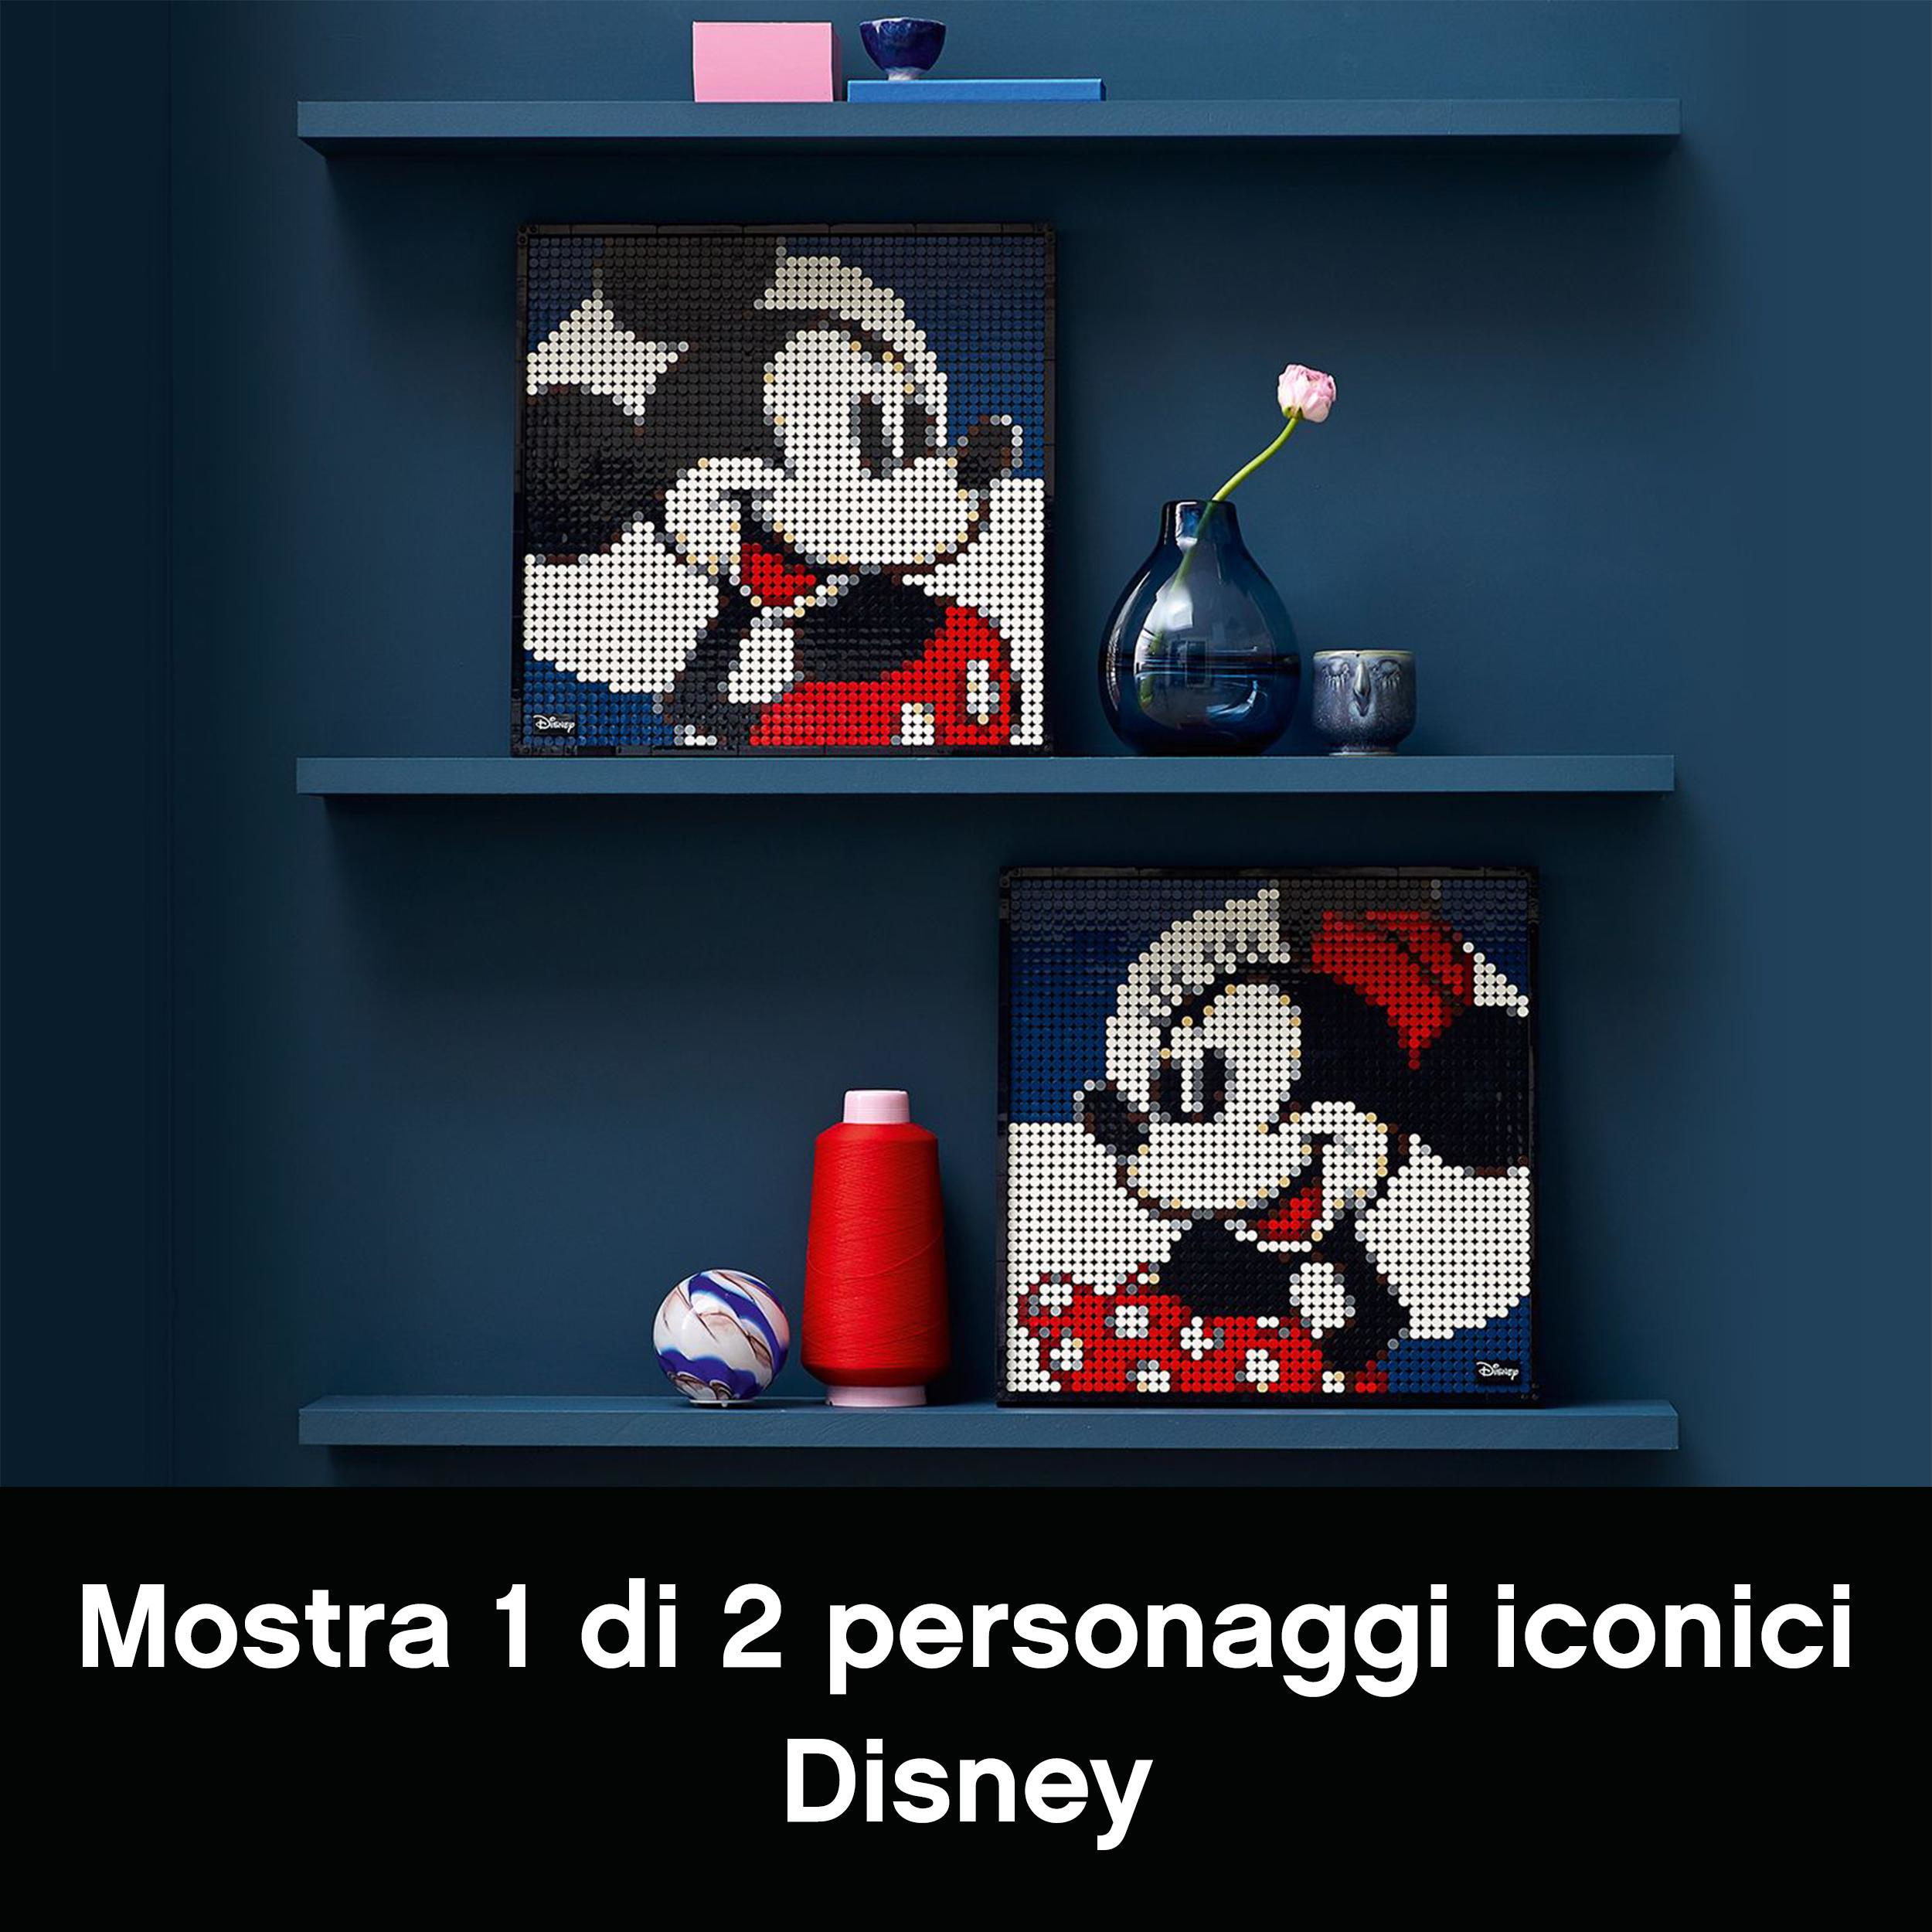 LEGO ART Disney's Mickey Mouse [31202]